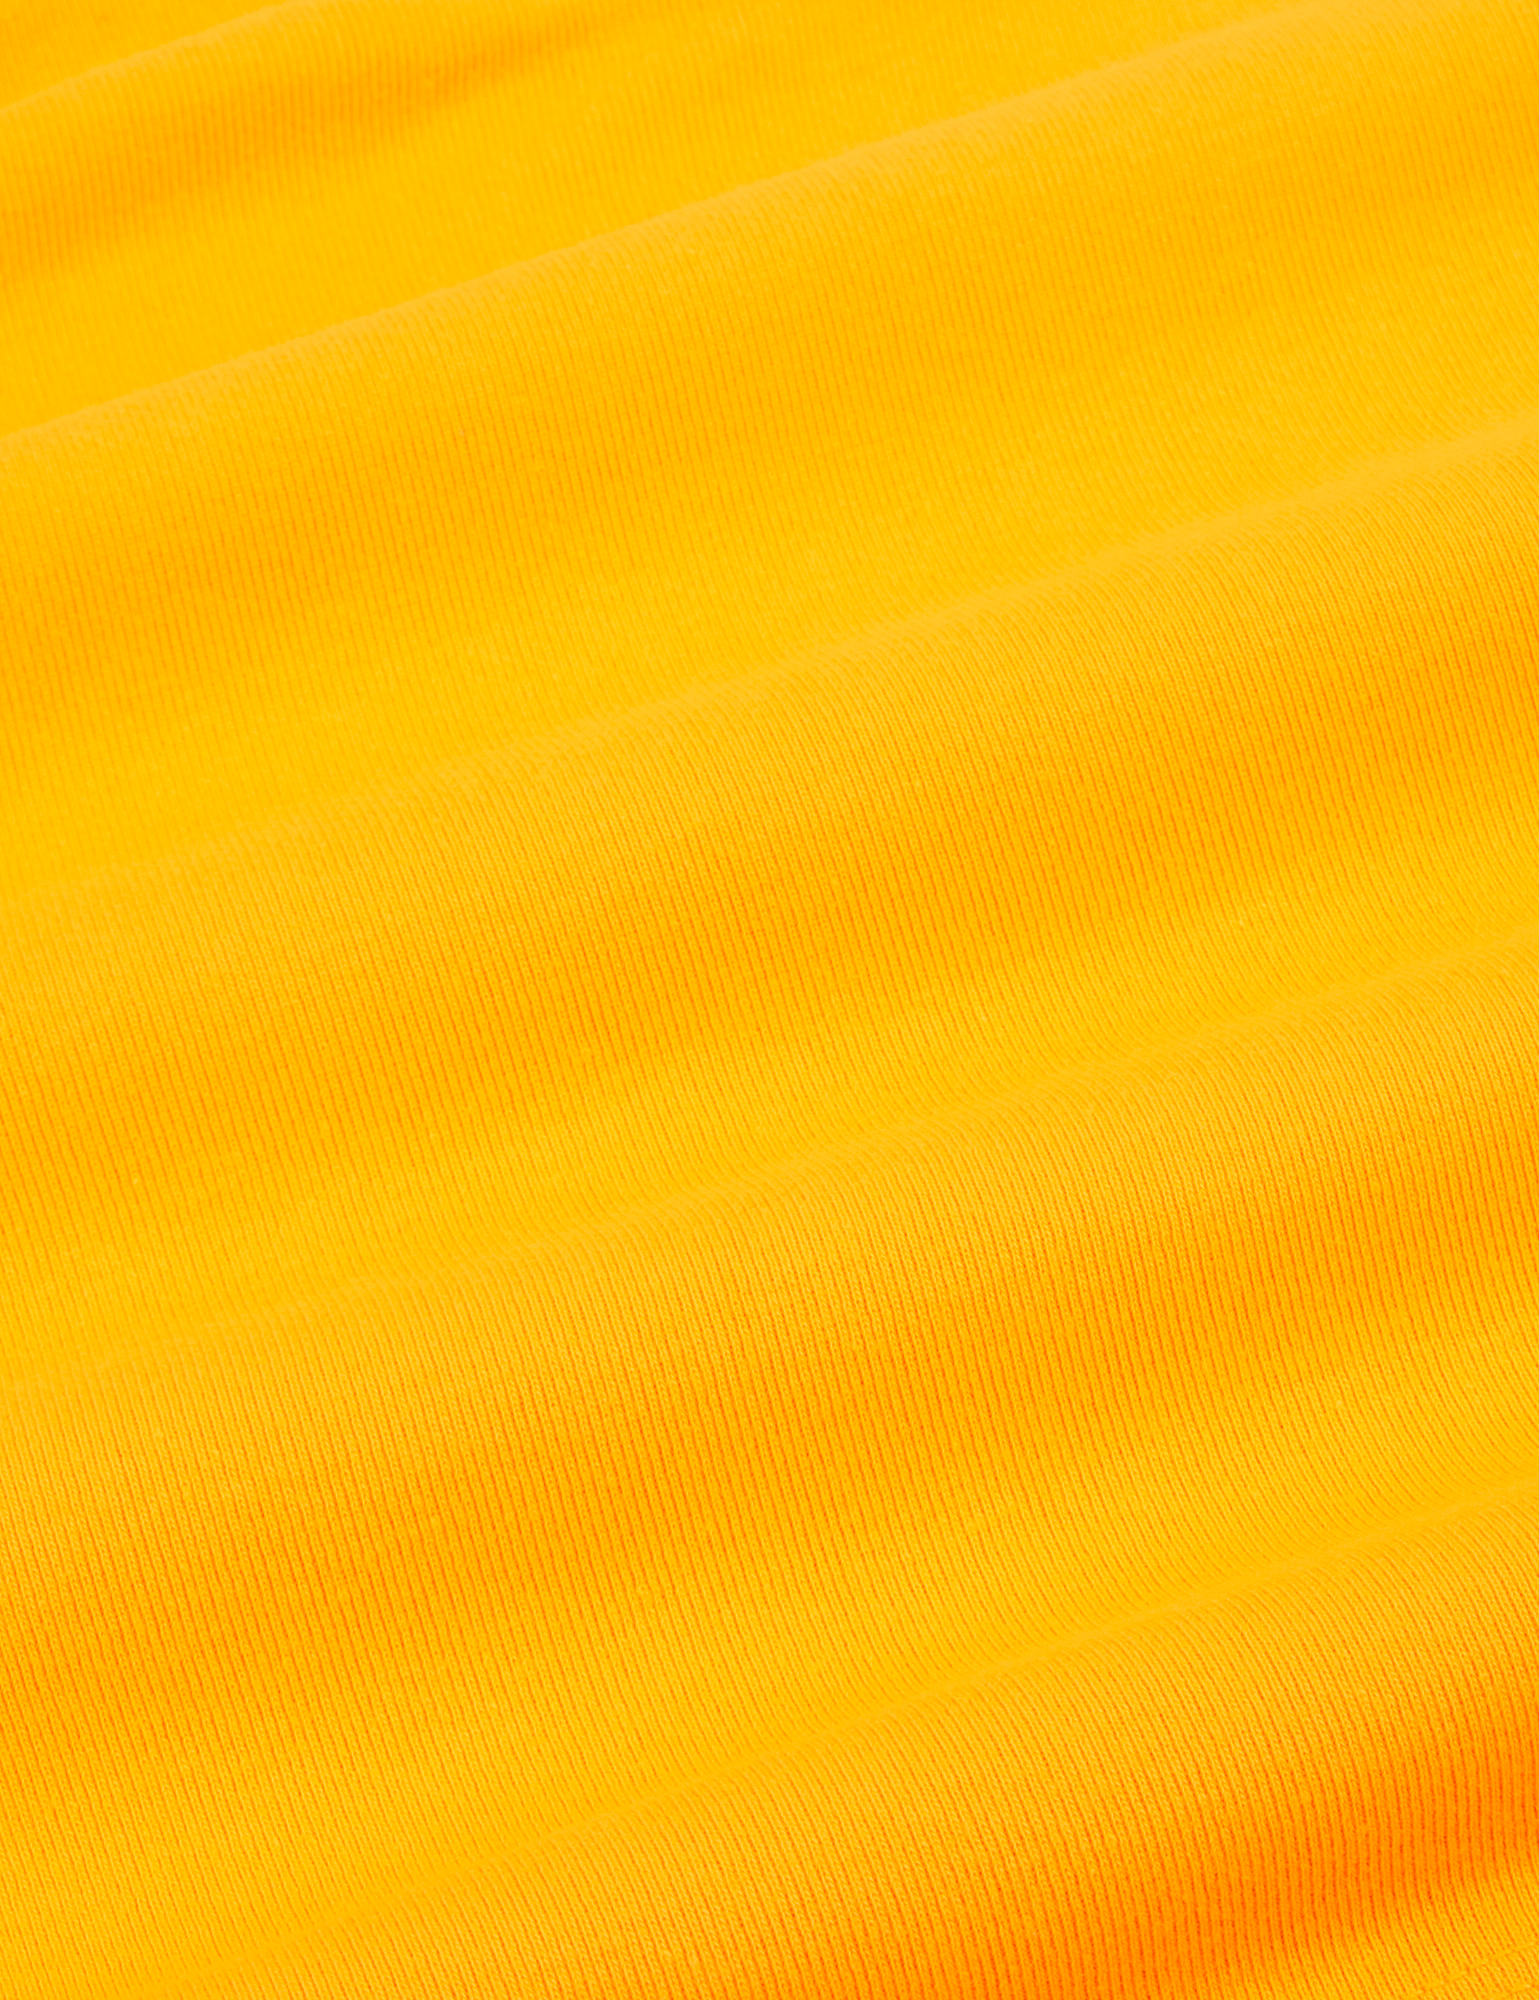 Cropped Cami - Sunshine Yellow